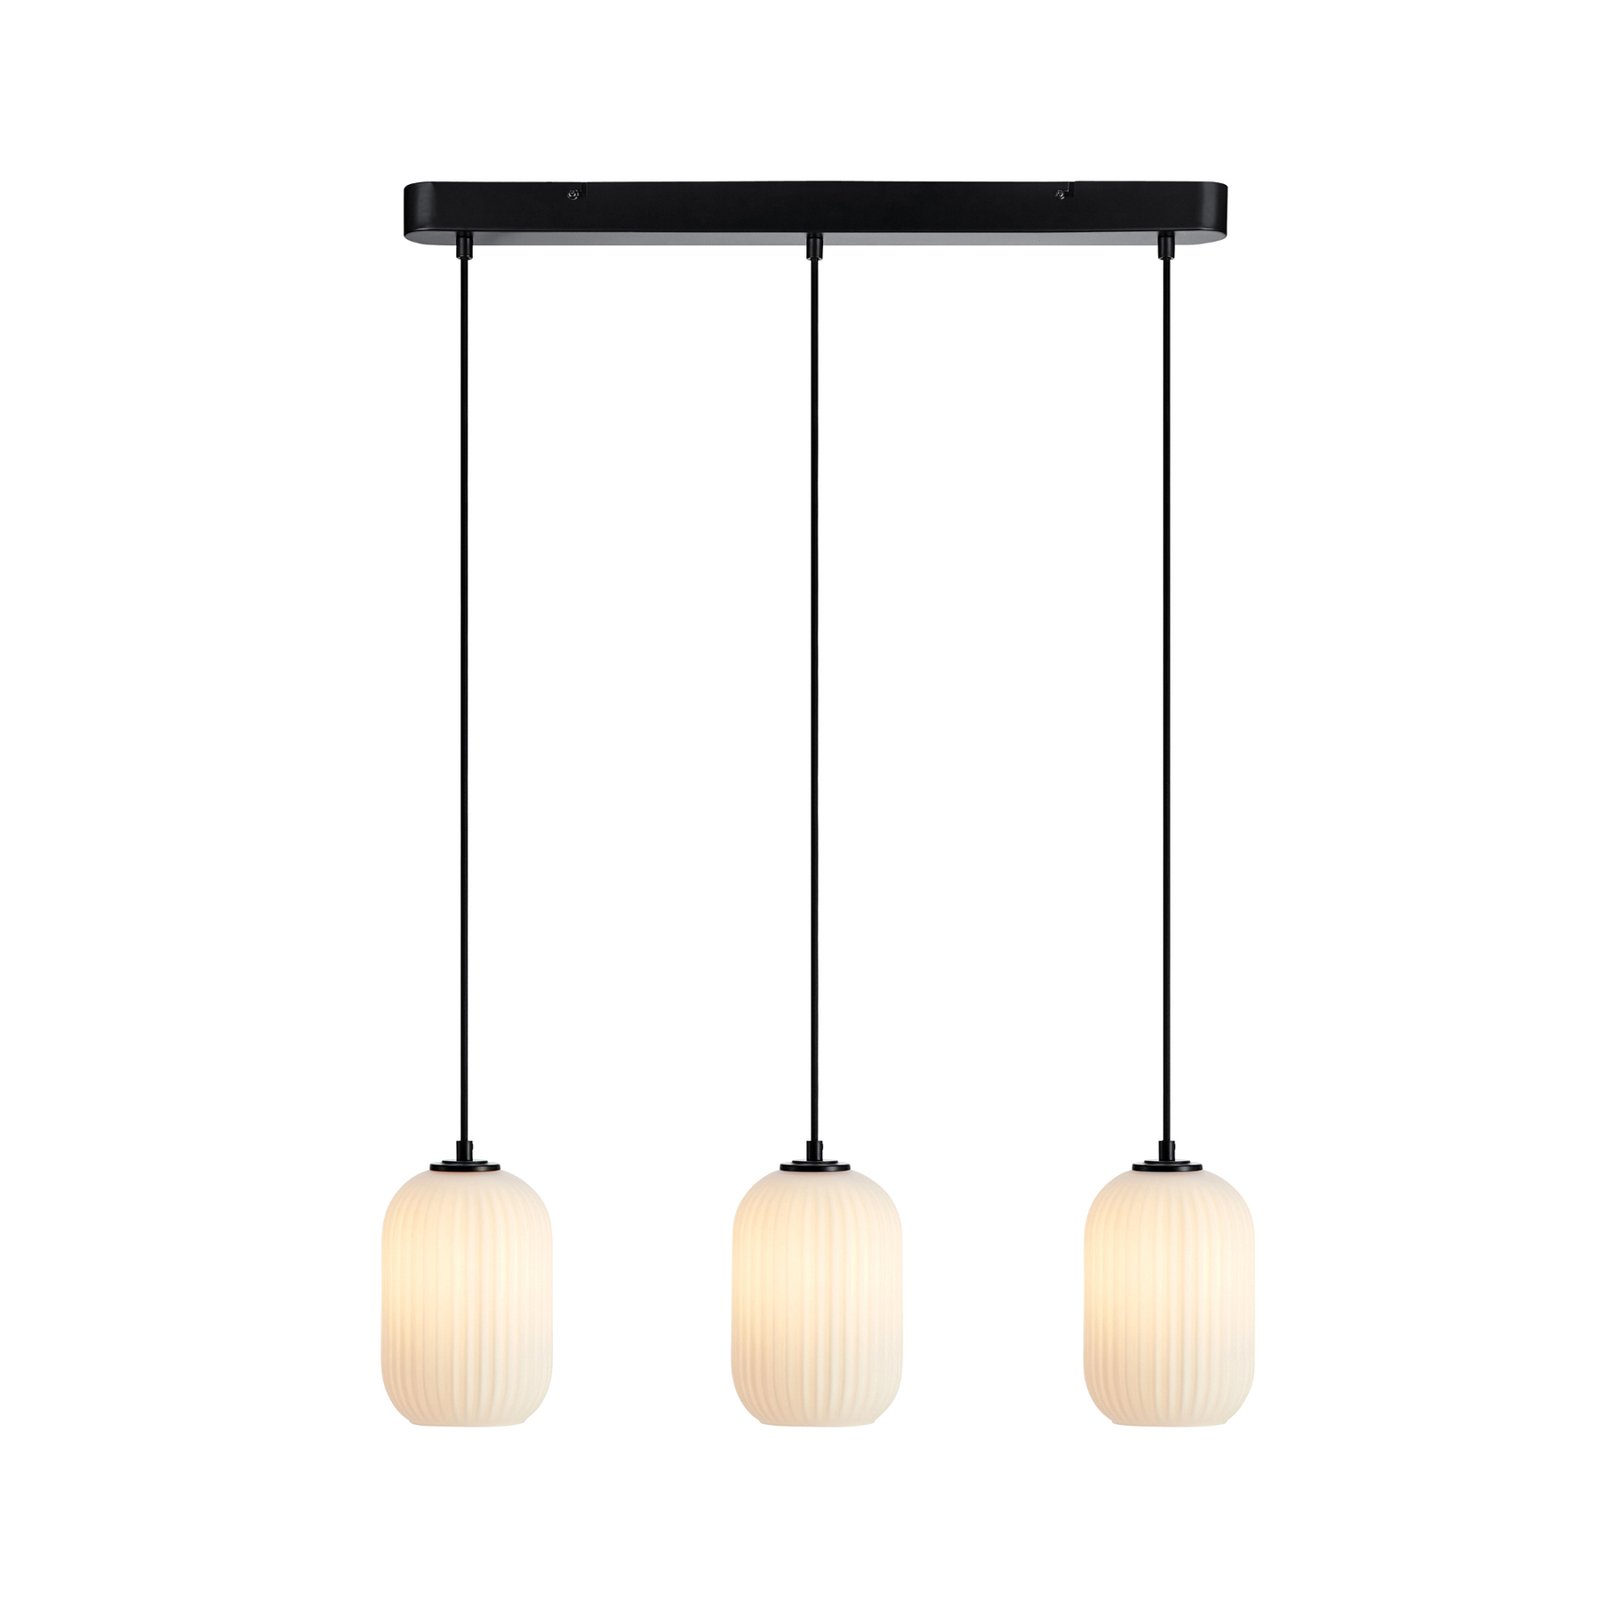 Cava hanging light, glass lampshades, 3-bulb